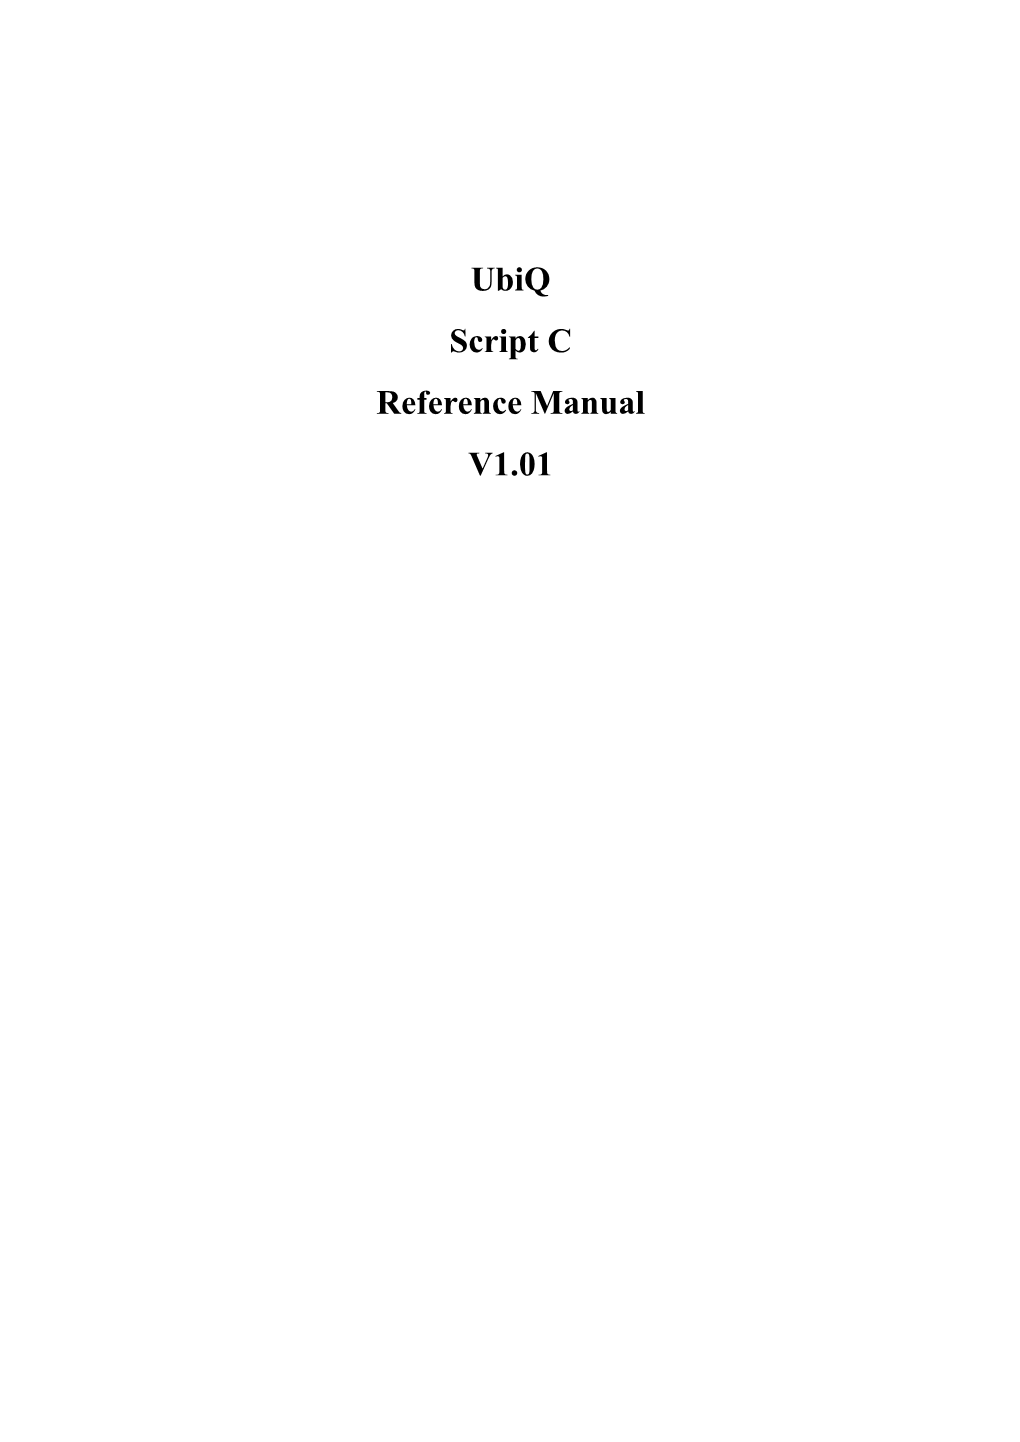 Ubiq Script C Reference Manual V1.01 Content